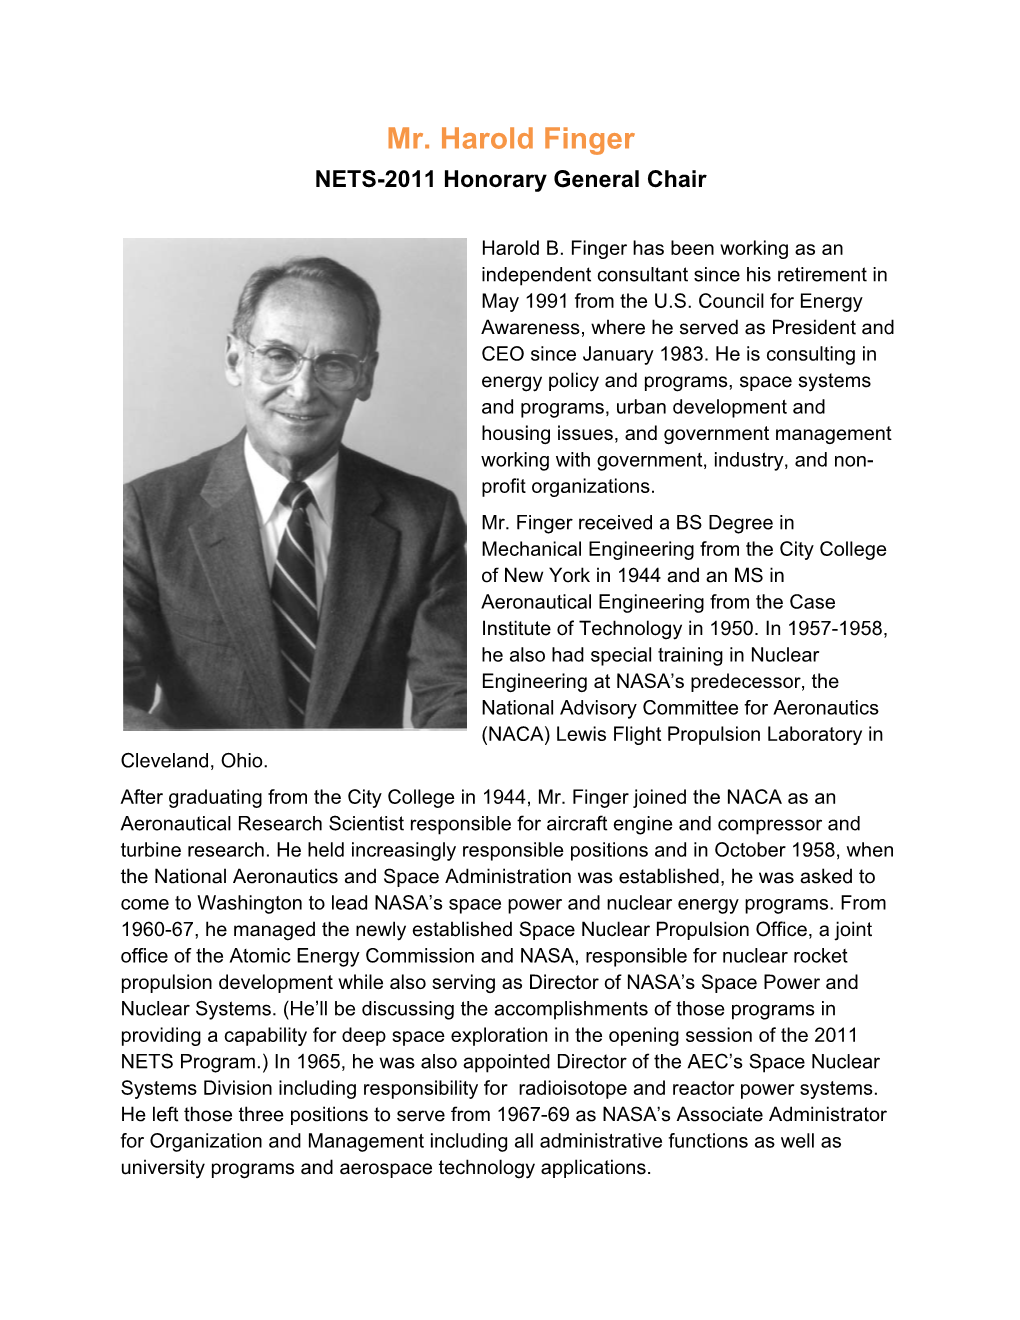 Mr. Harold Finger NETS-2011 Honorary General Chair